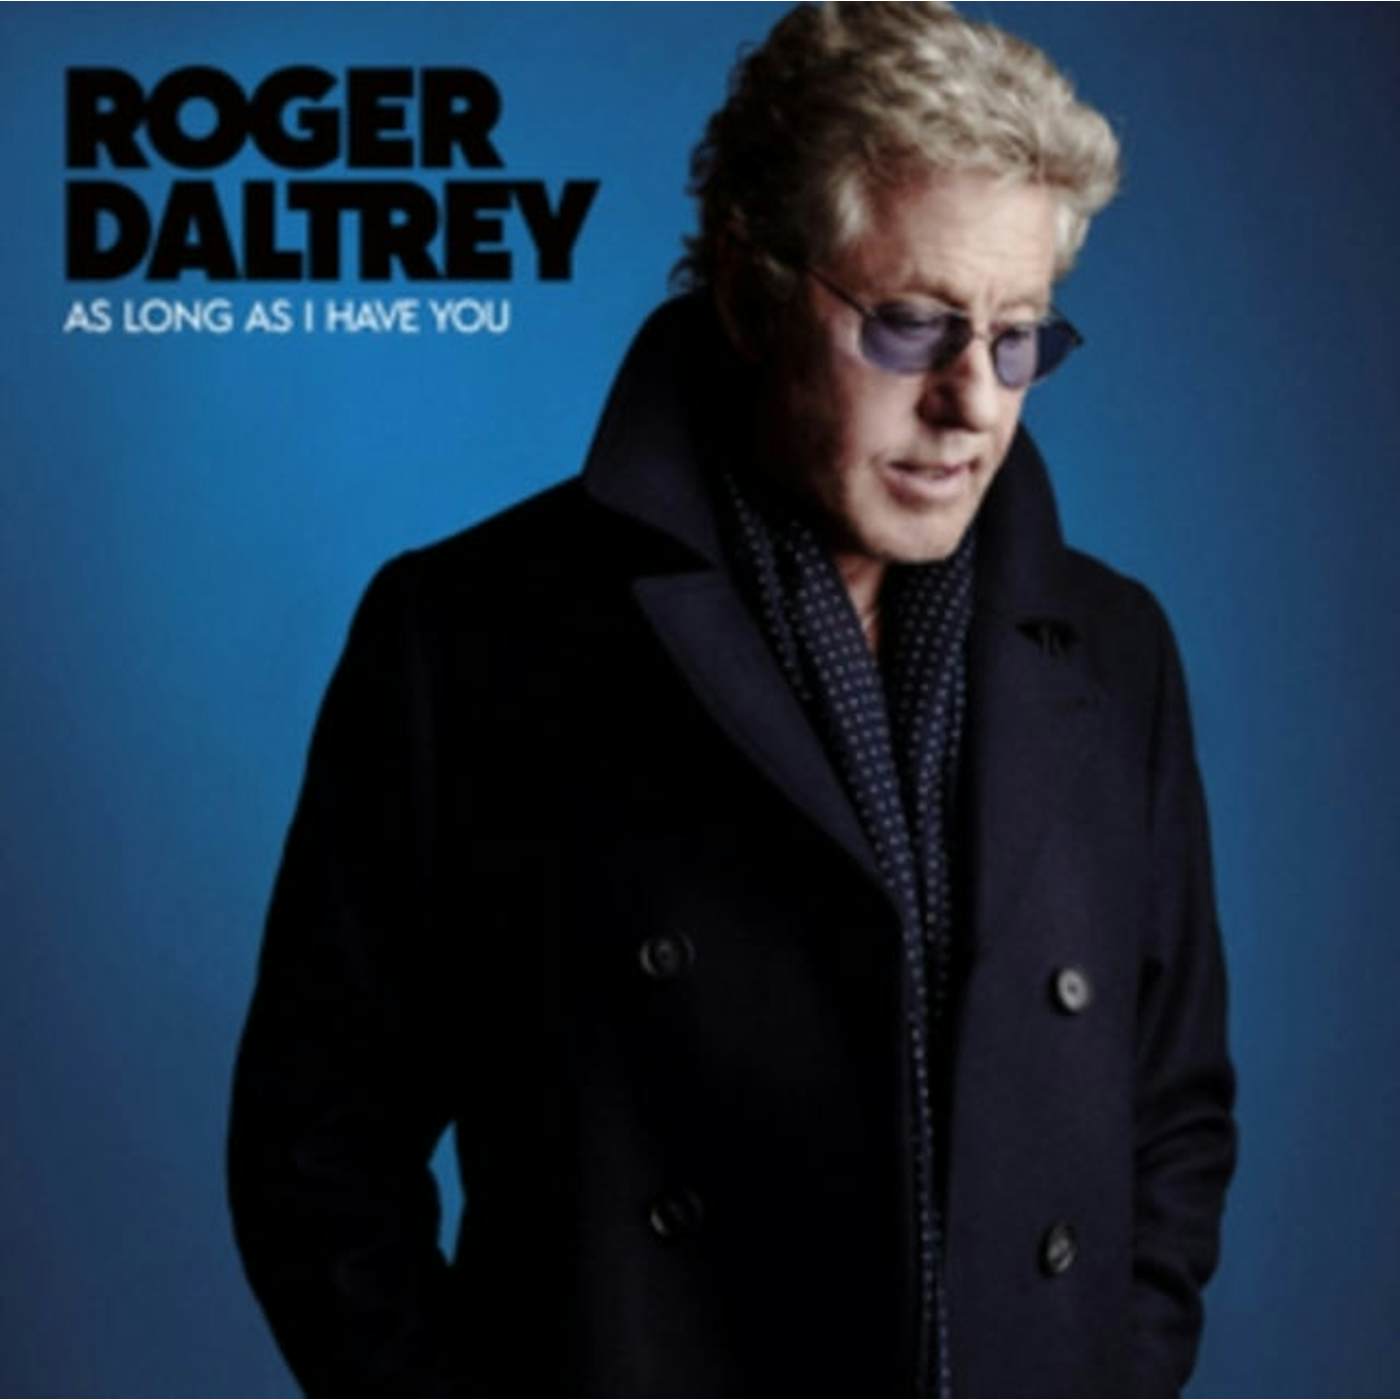 Roger Daltrey LP Vinyl Record - As Long As I Have You